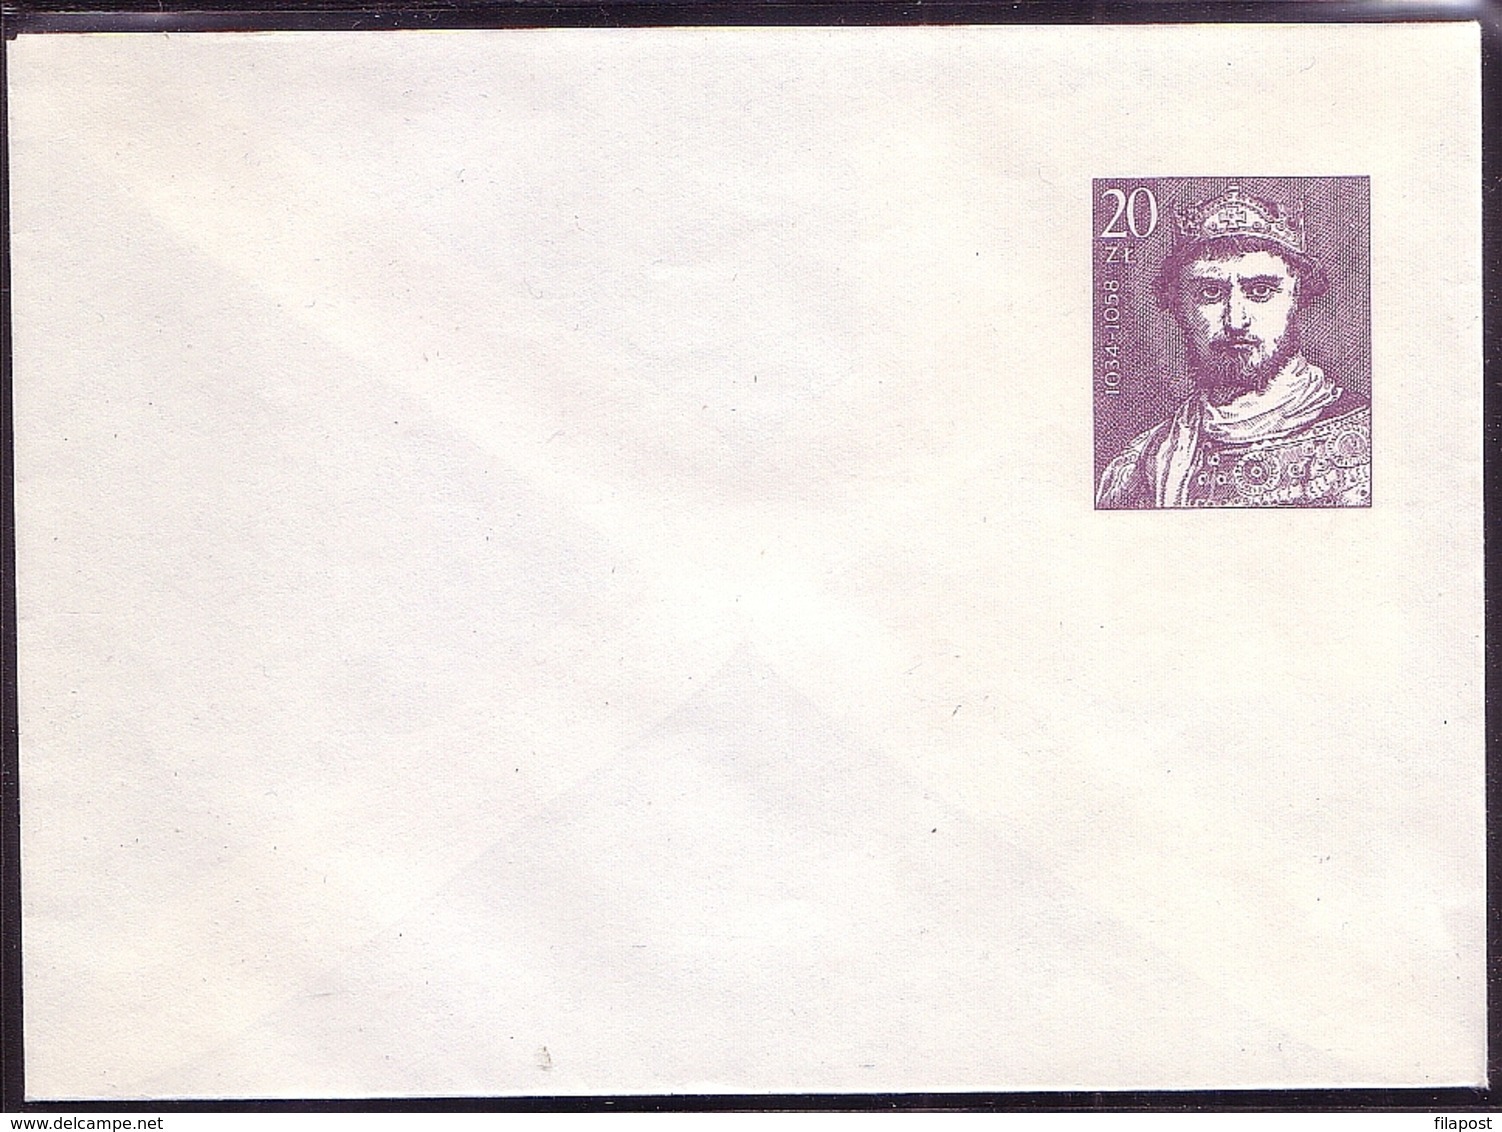 Poland 1988  Fi Ck 85 Error On The Stamp. No Olive Color Mint. King K. Odnowiciel Fotoatest Wysocki PZF - Errors & Oddities